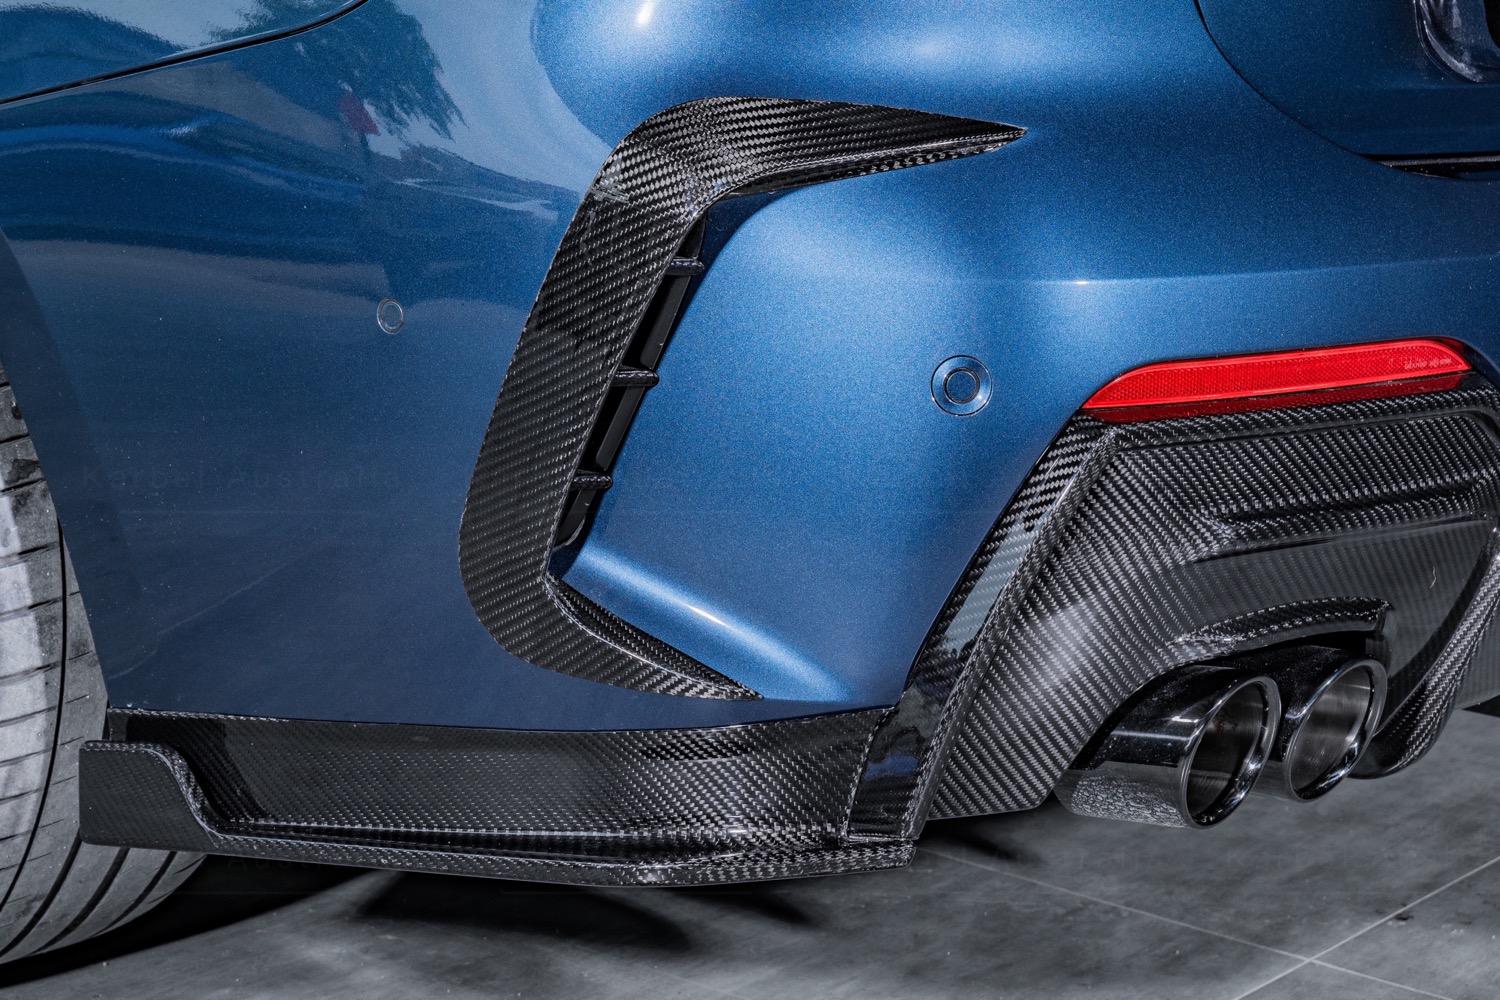 Check price and buy Karbel Carbon Fiber Body kit set for BMW 4 series G22/G23